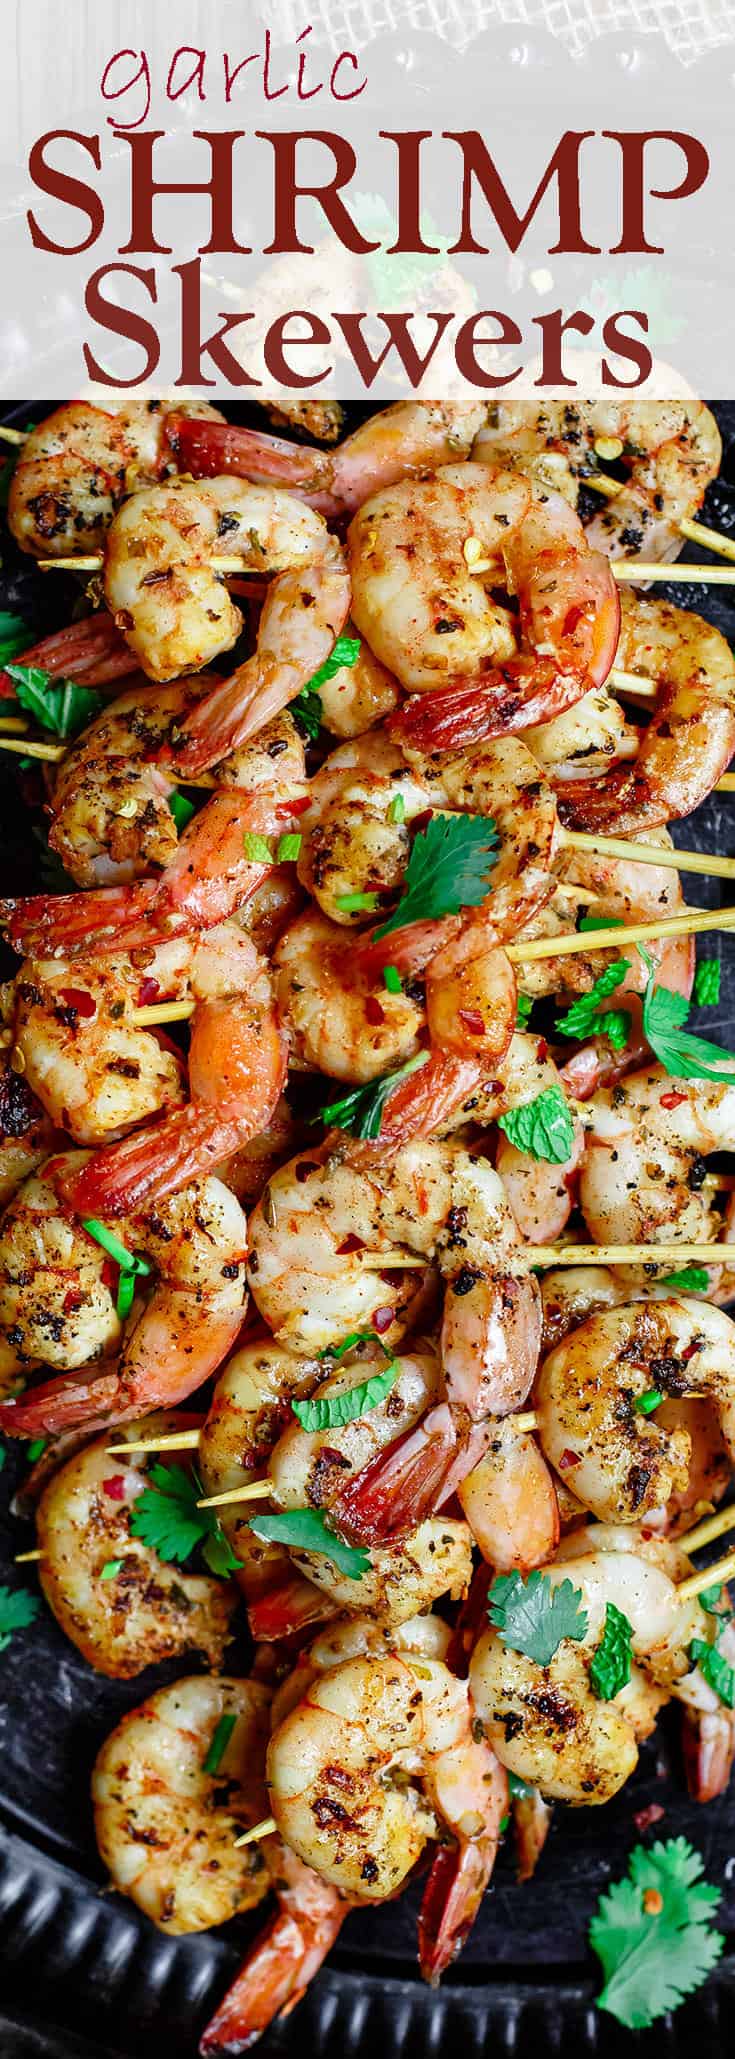 Mediterranean Garlic Shrimp Skewers Recipe | The Mediterranean Dish